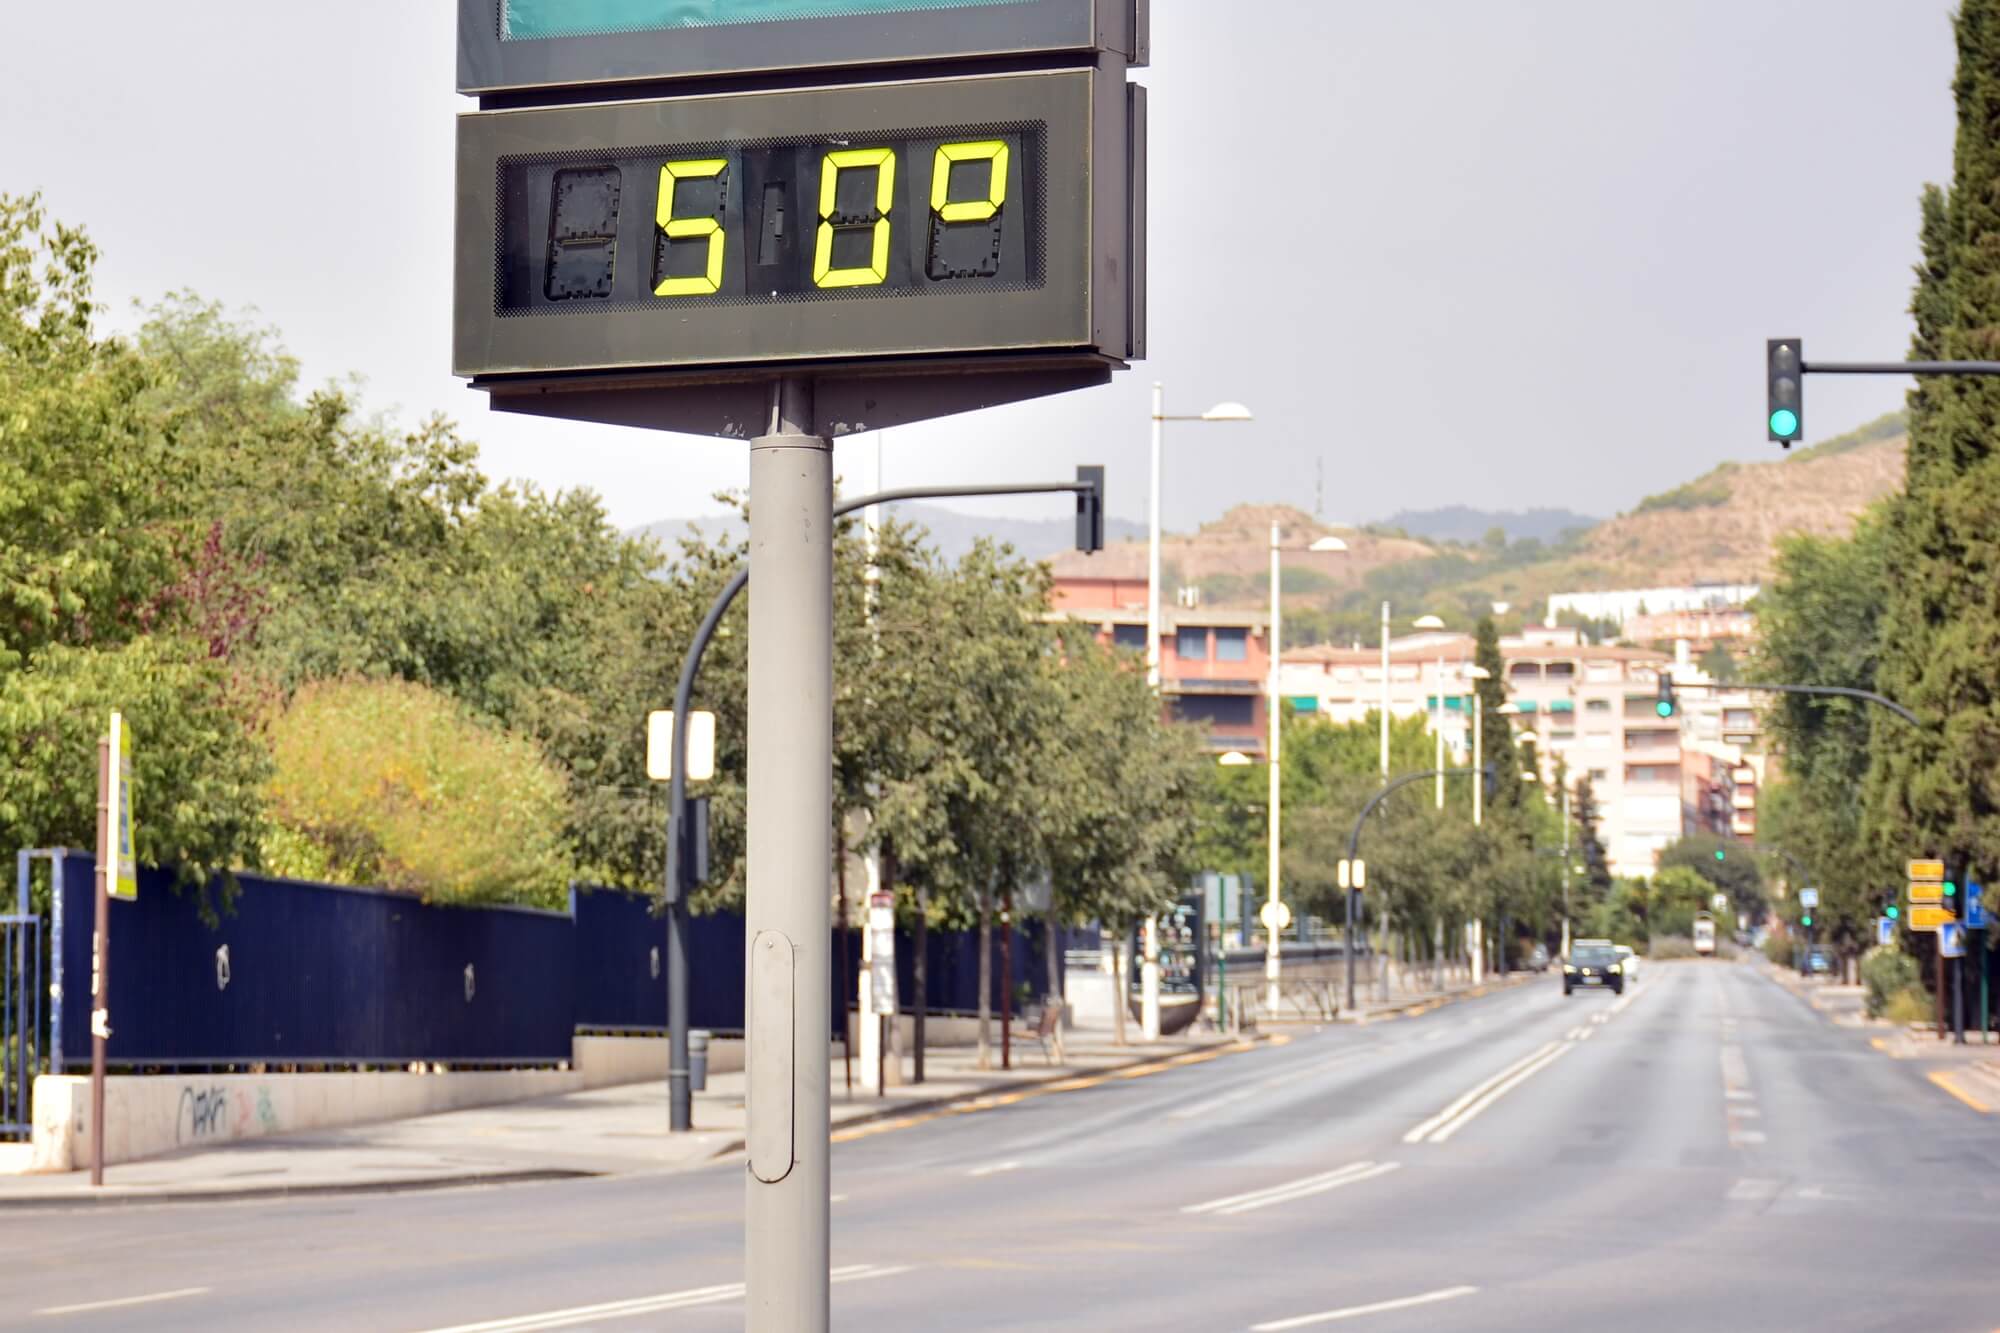 Extreme heat measures in Europe. Image: depositphotos.com